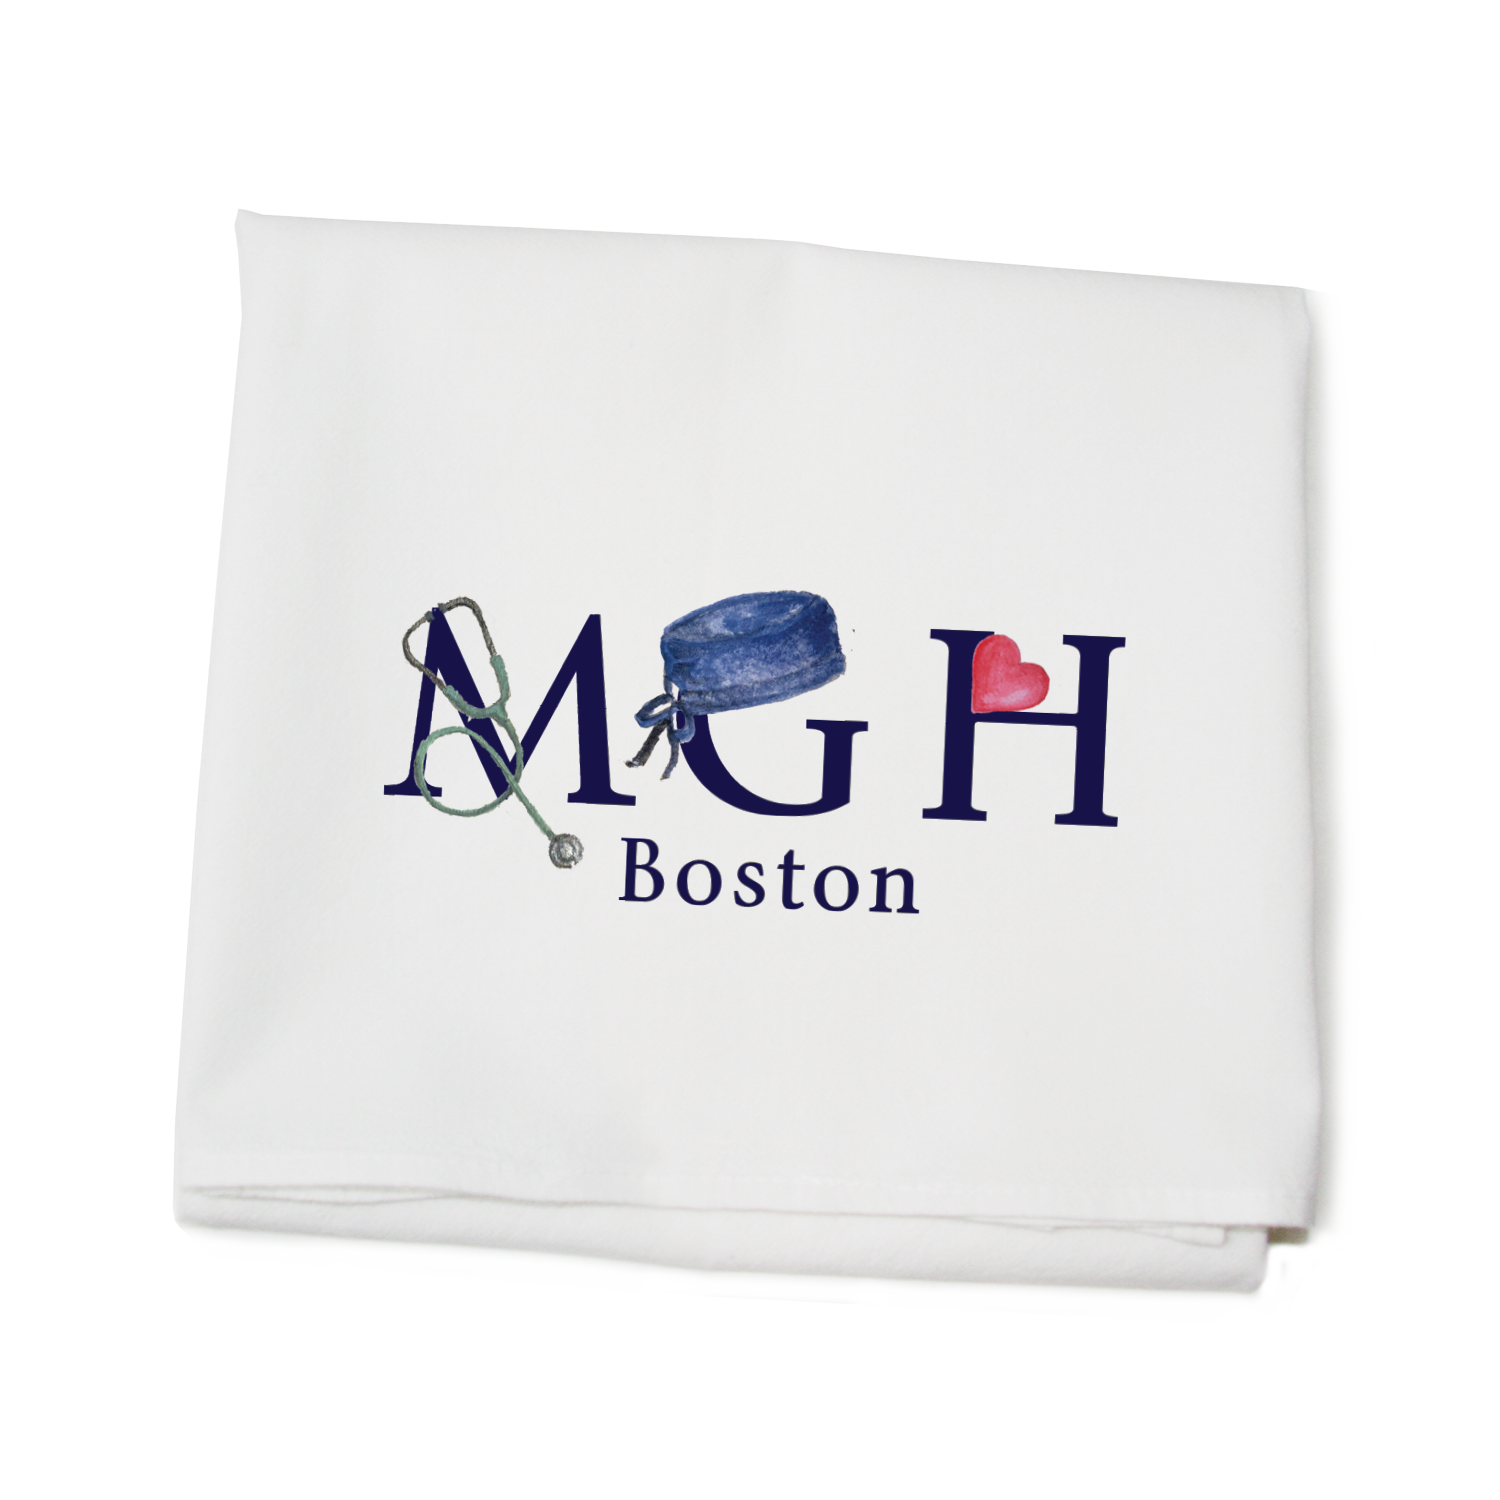 MGH Boston flour sack towel